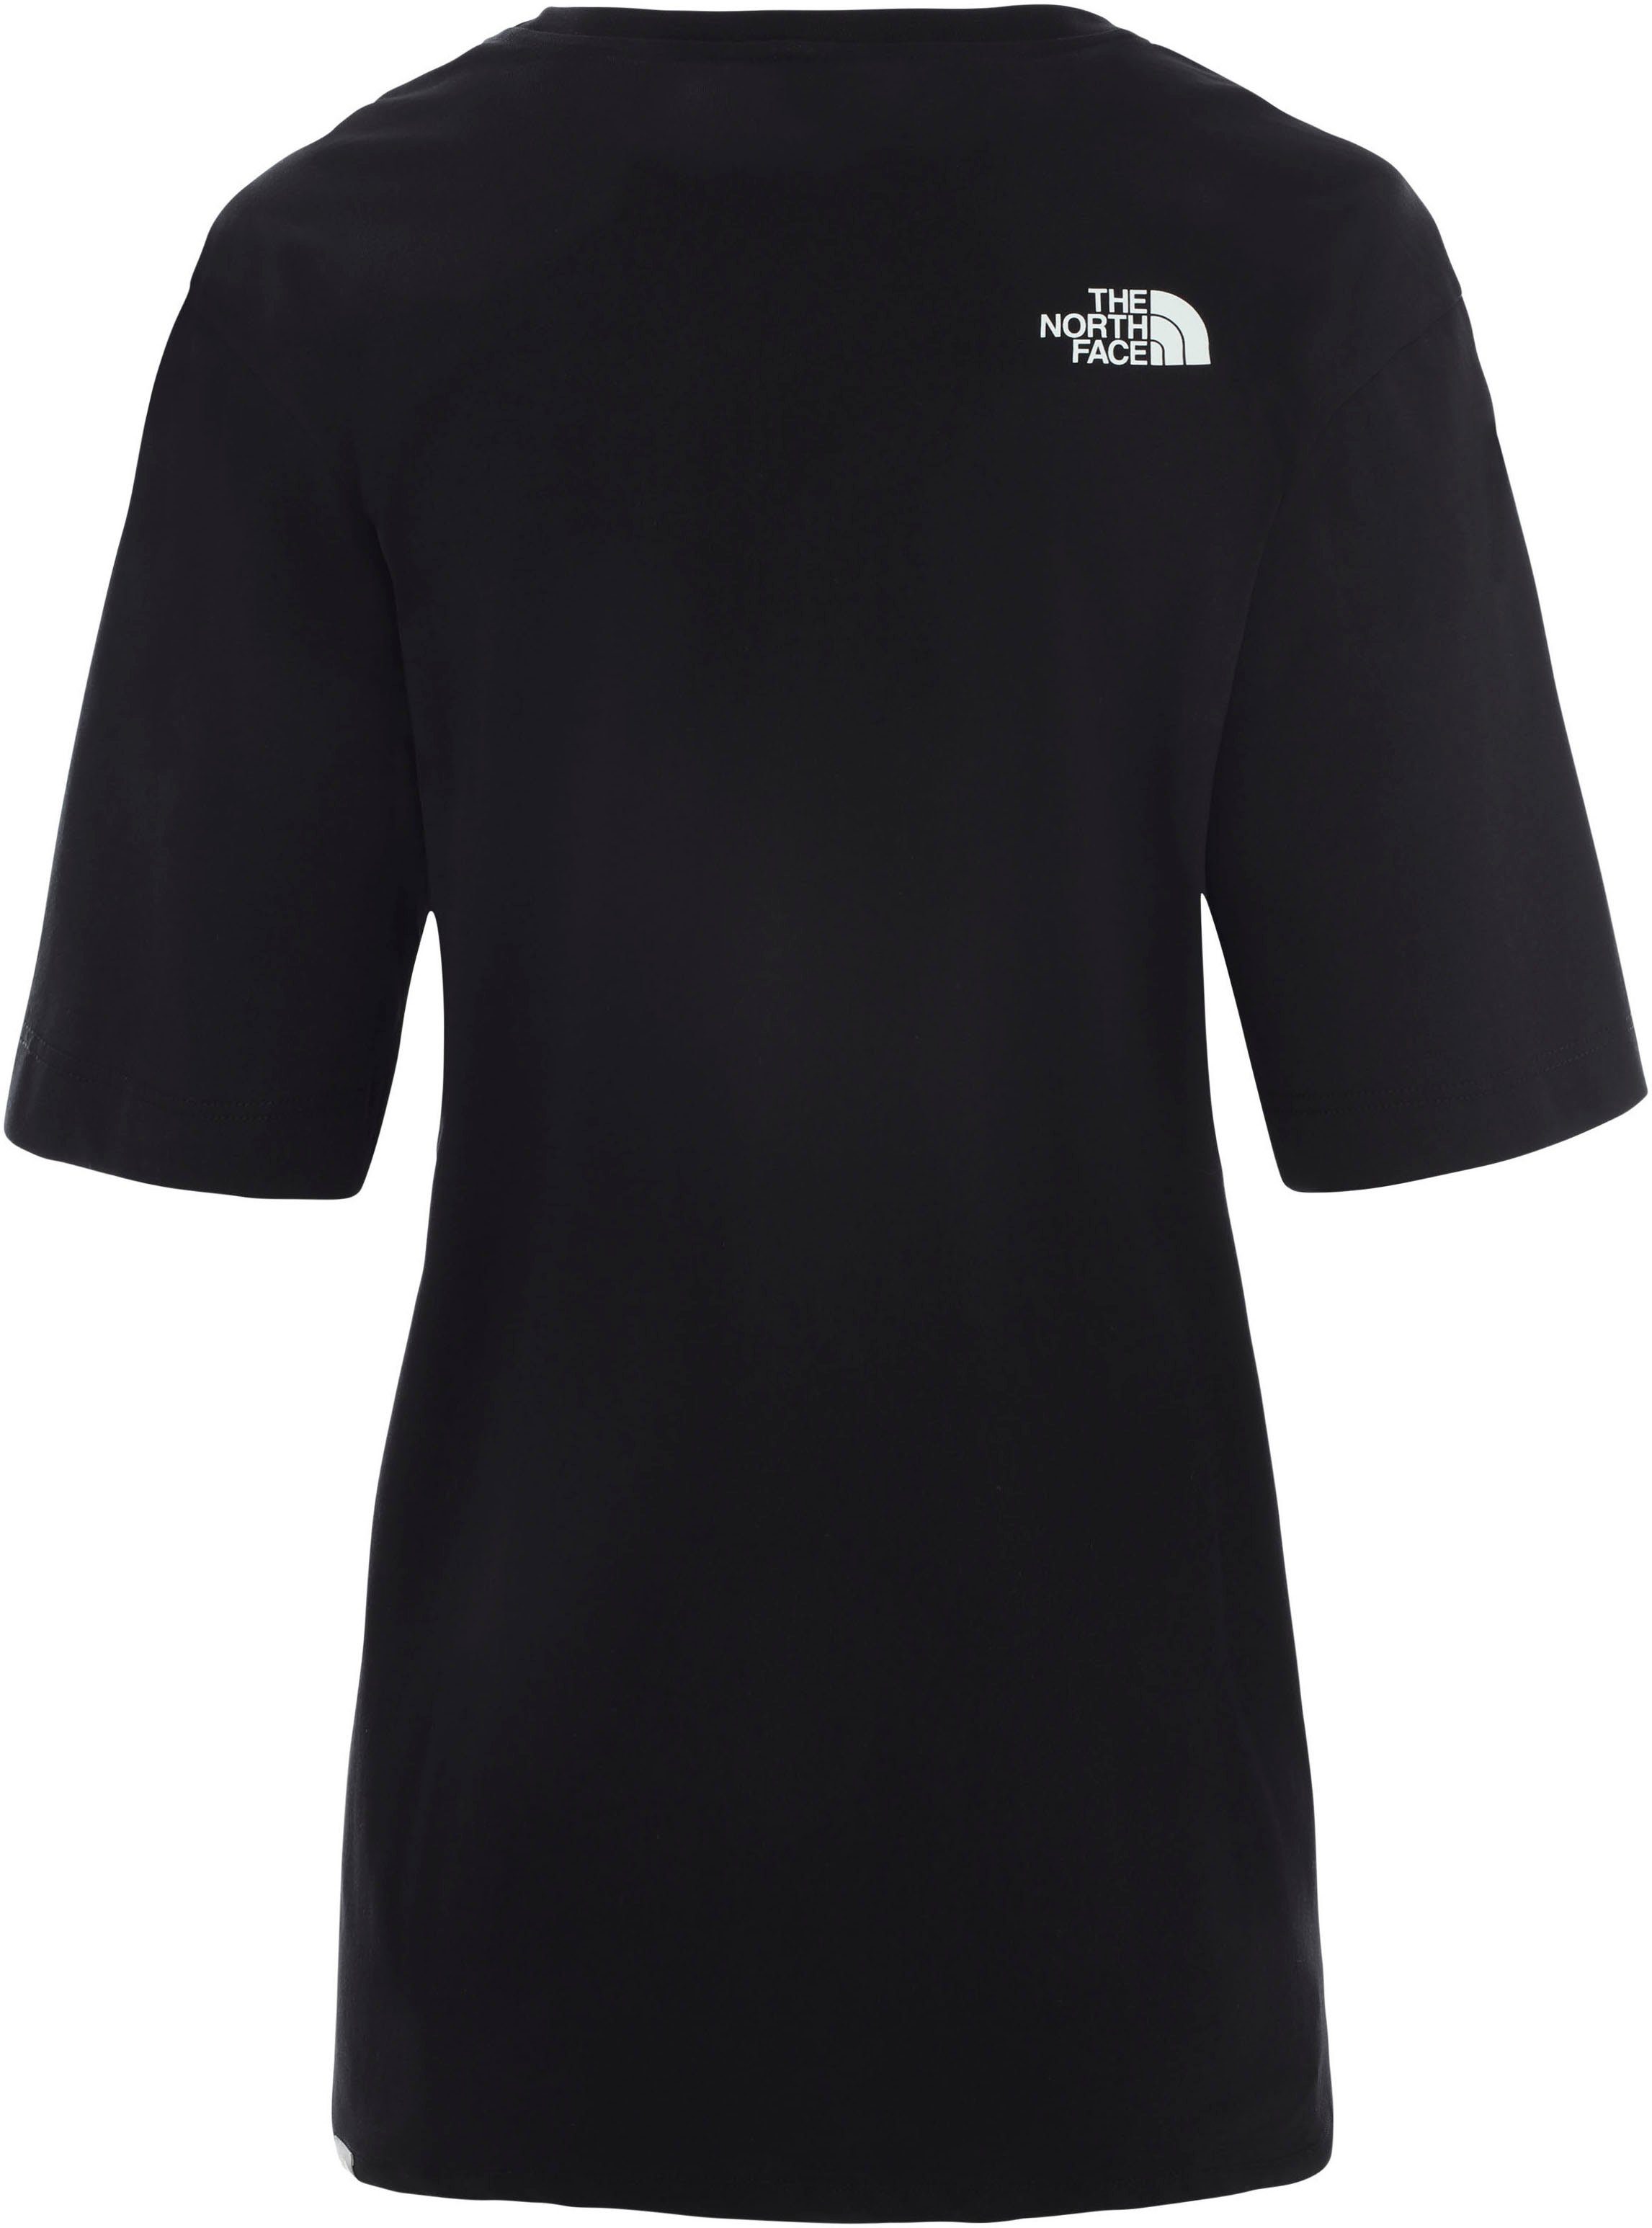 The North Face T-Shirt black Logodruck W EASY mit Brust der RELAXED TEE auf